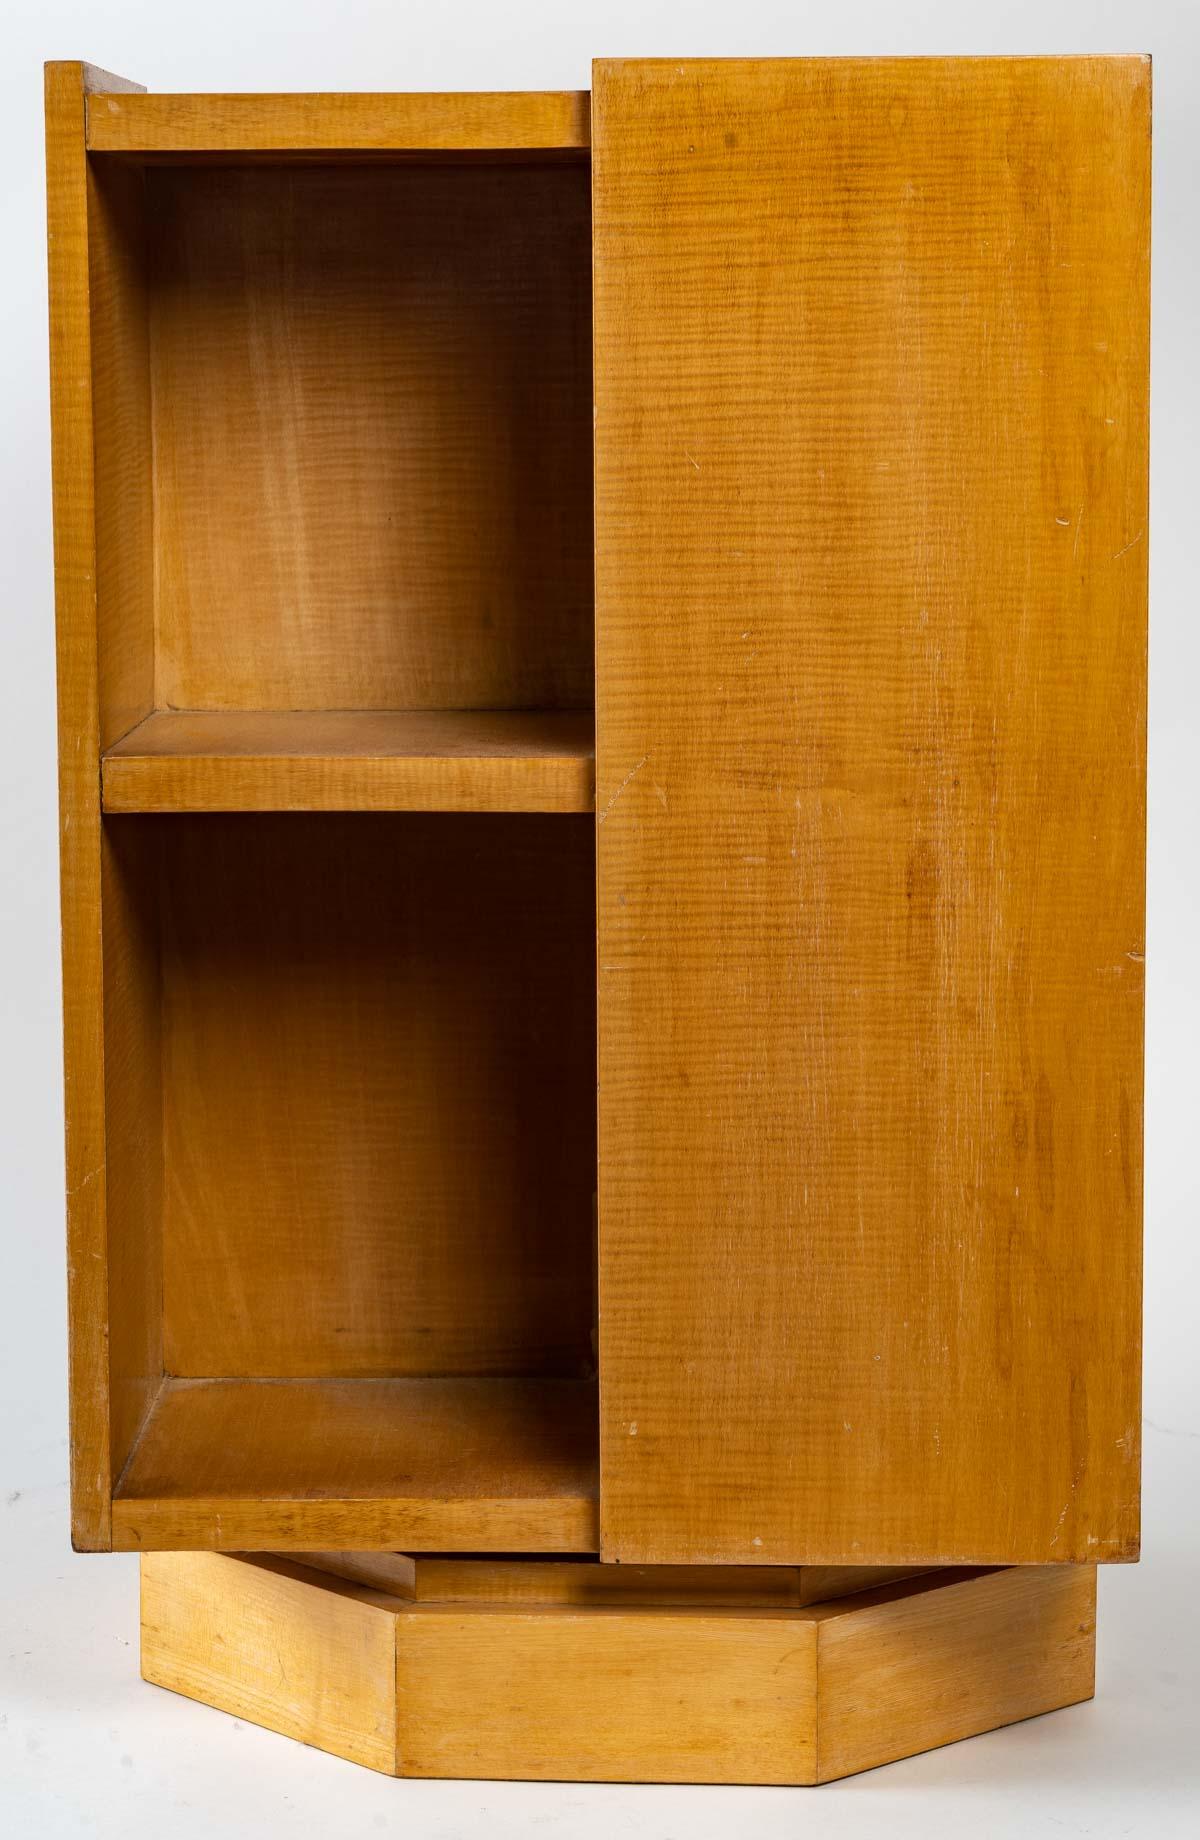 Wood Charming Revolving Bookcase Called Bibus